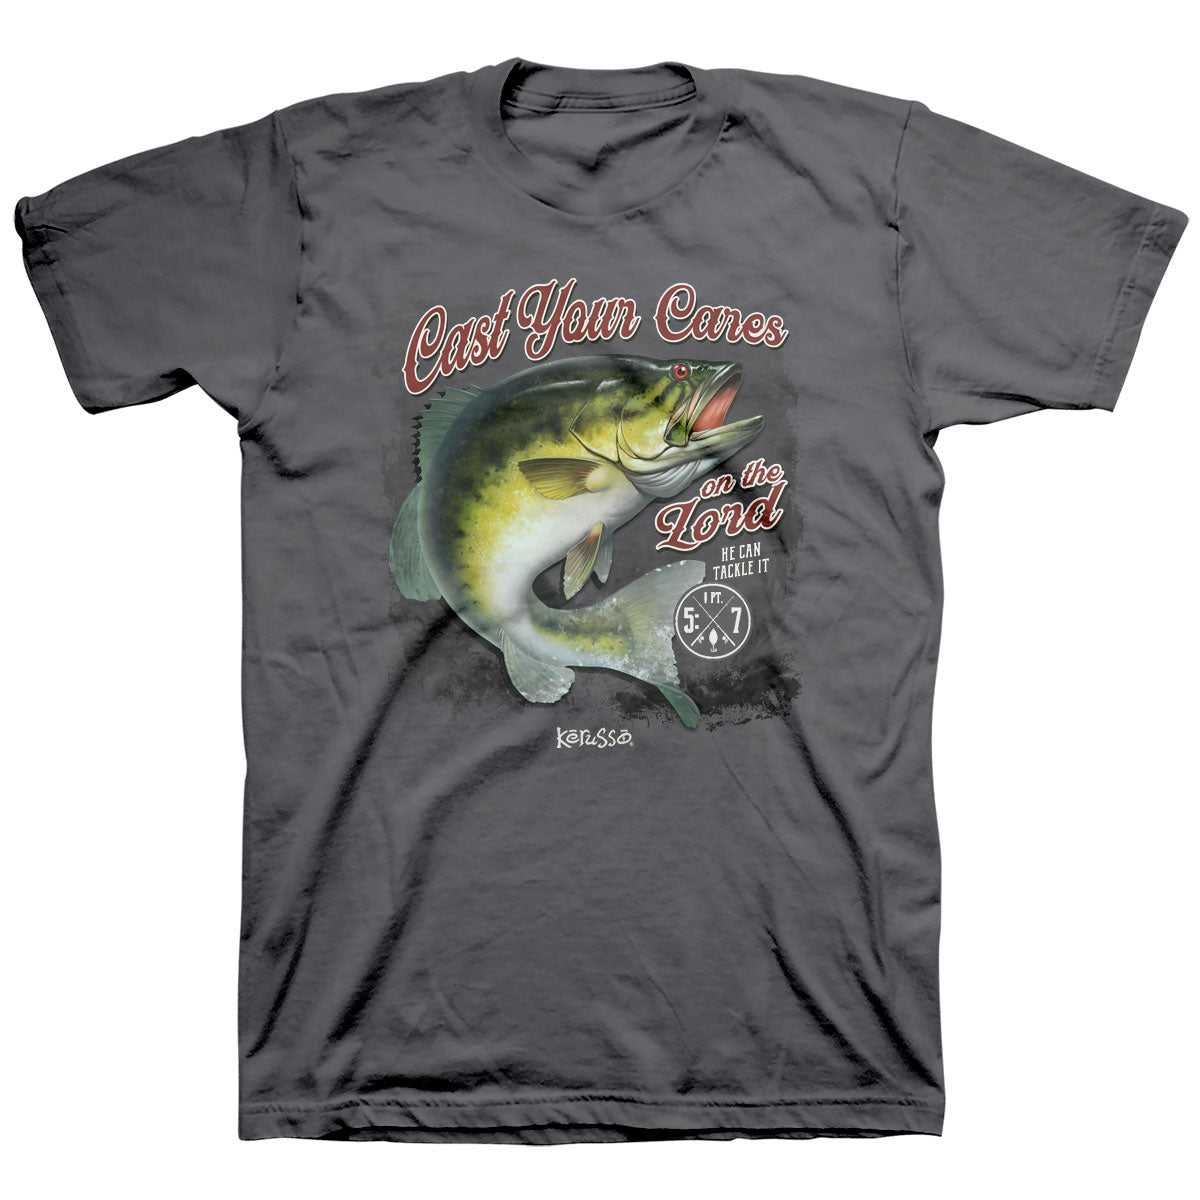 God Bass America Funny Bass Fishing Trendy Gift Set Idea Shirt